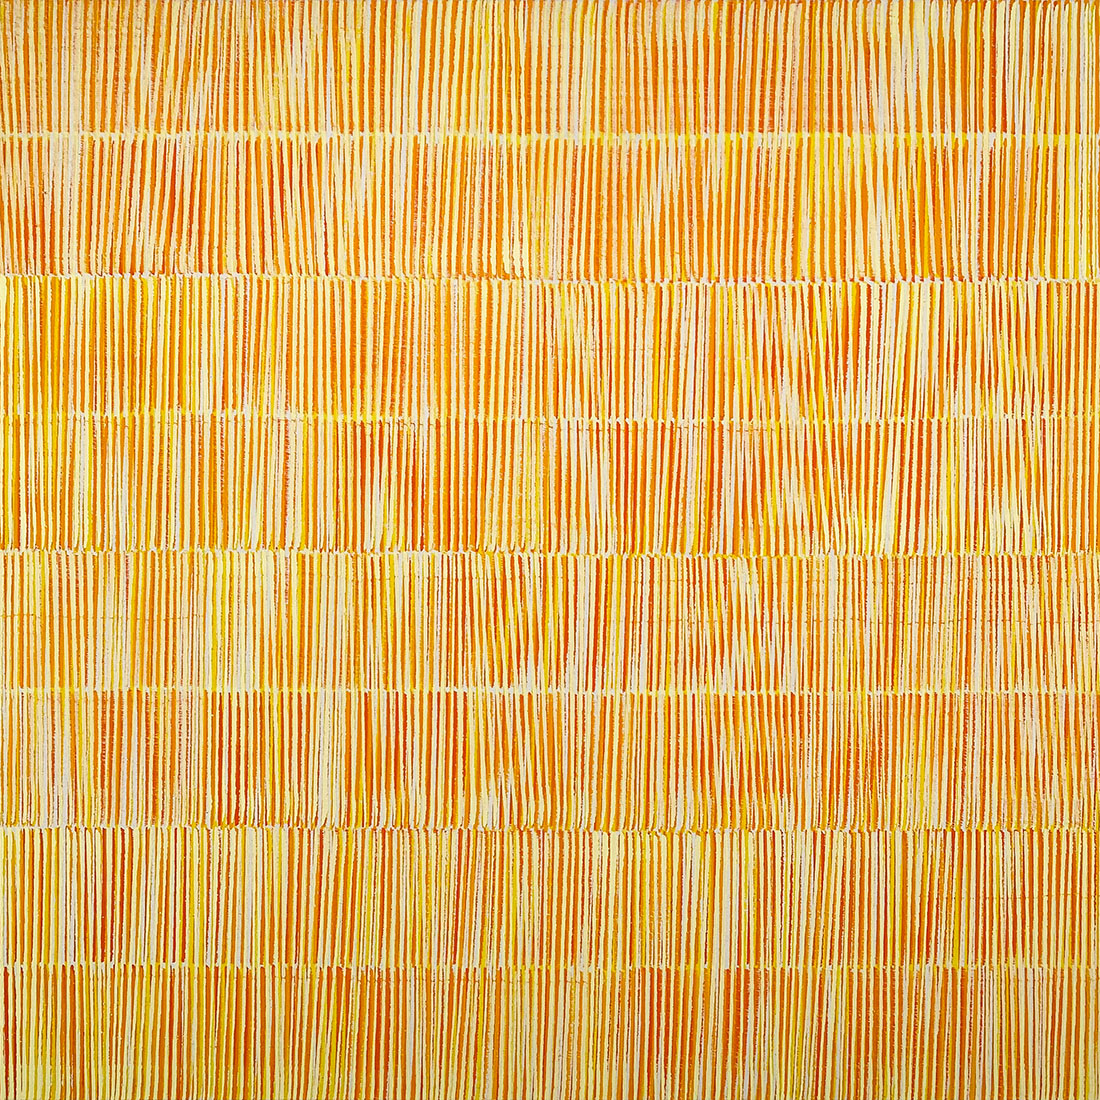 Nikola Dimitrov, FarbKlang Bewegt II, 2021, Pigmente, Bindemittel auf Leinwand, 80 × 80 cm